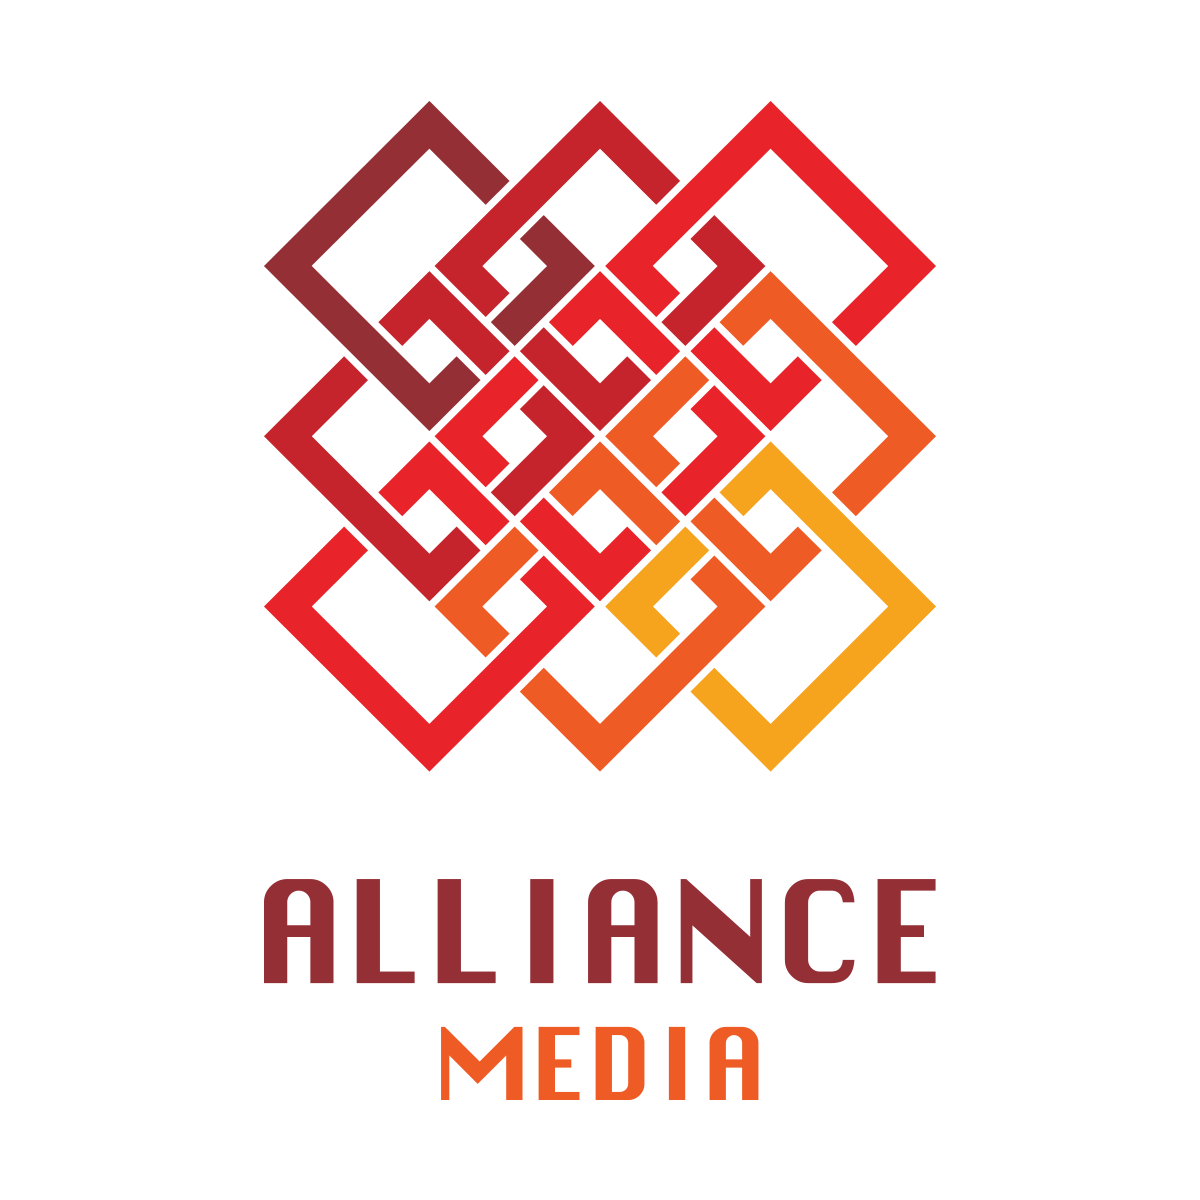 Alliance Media